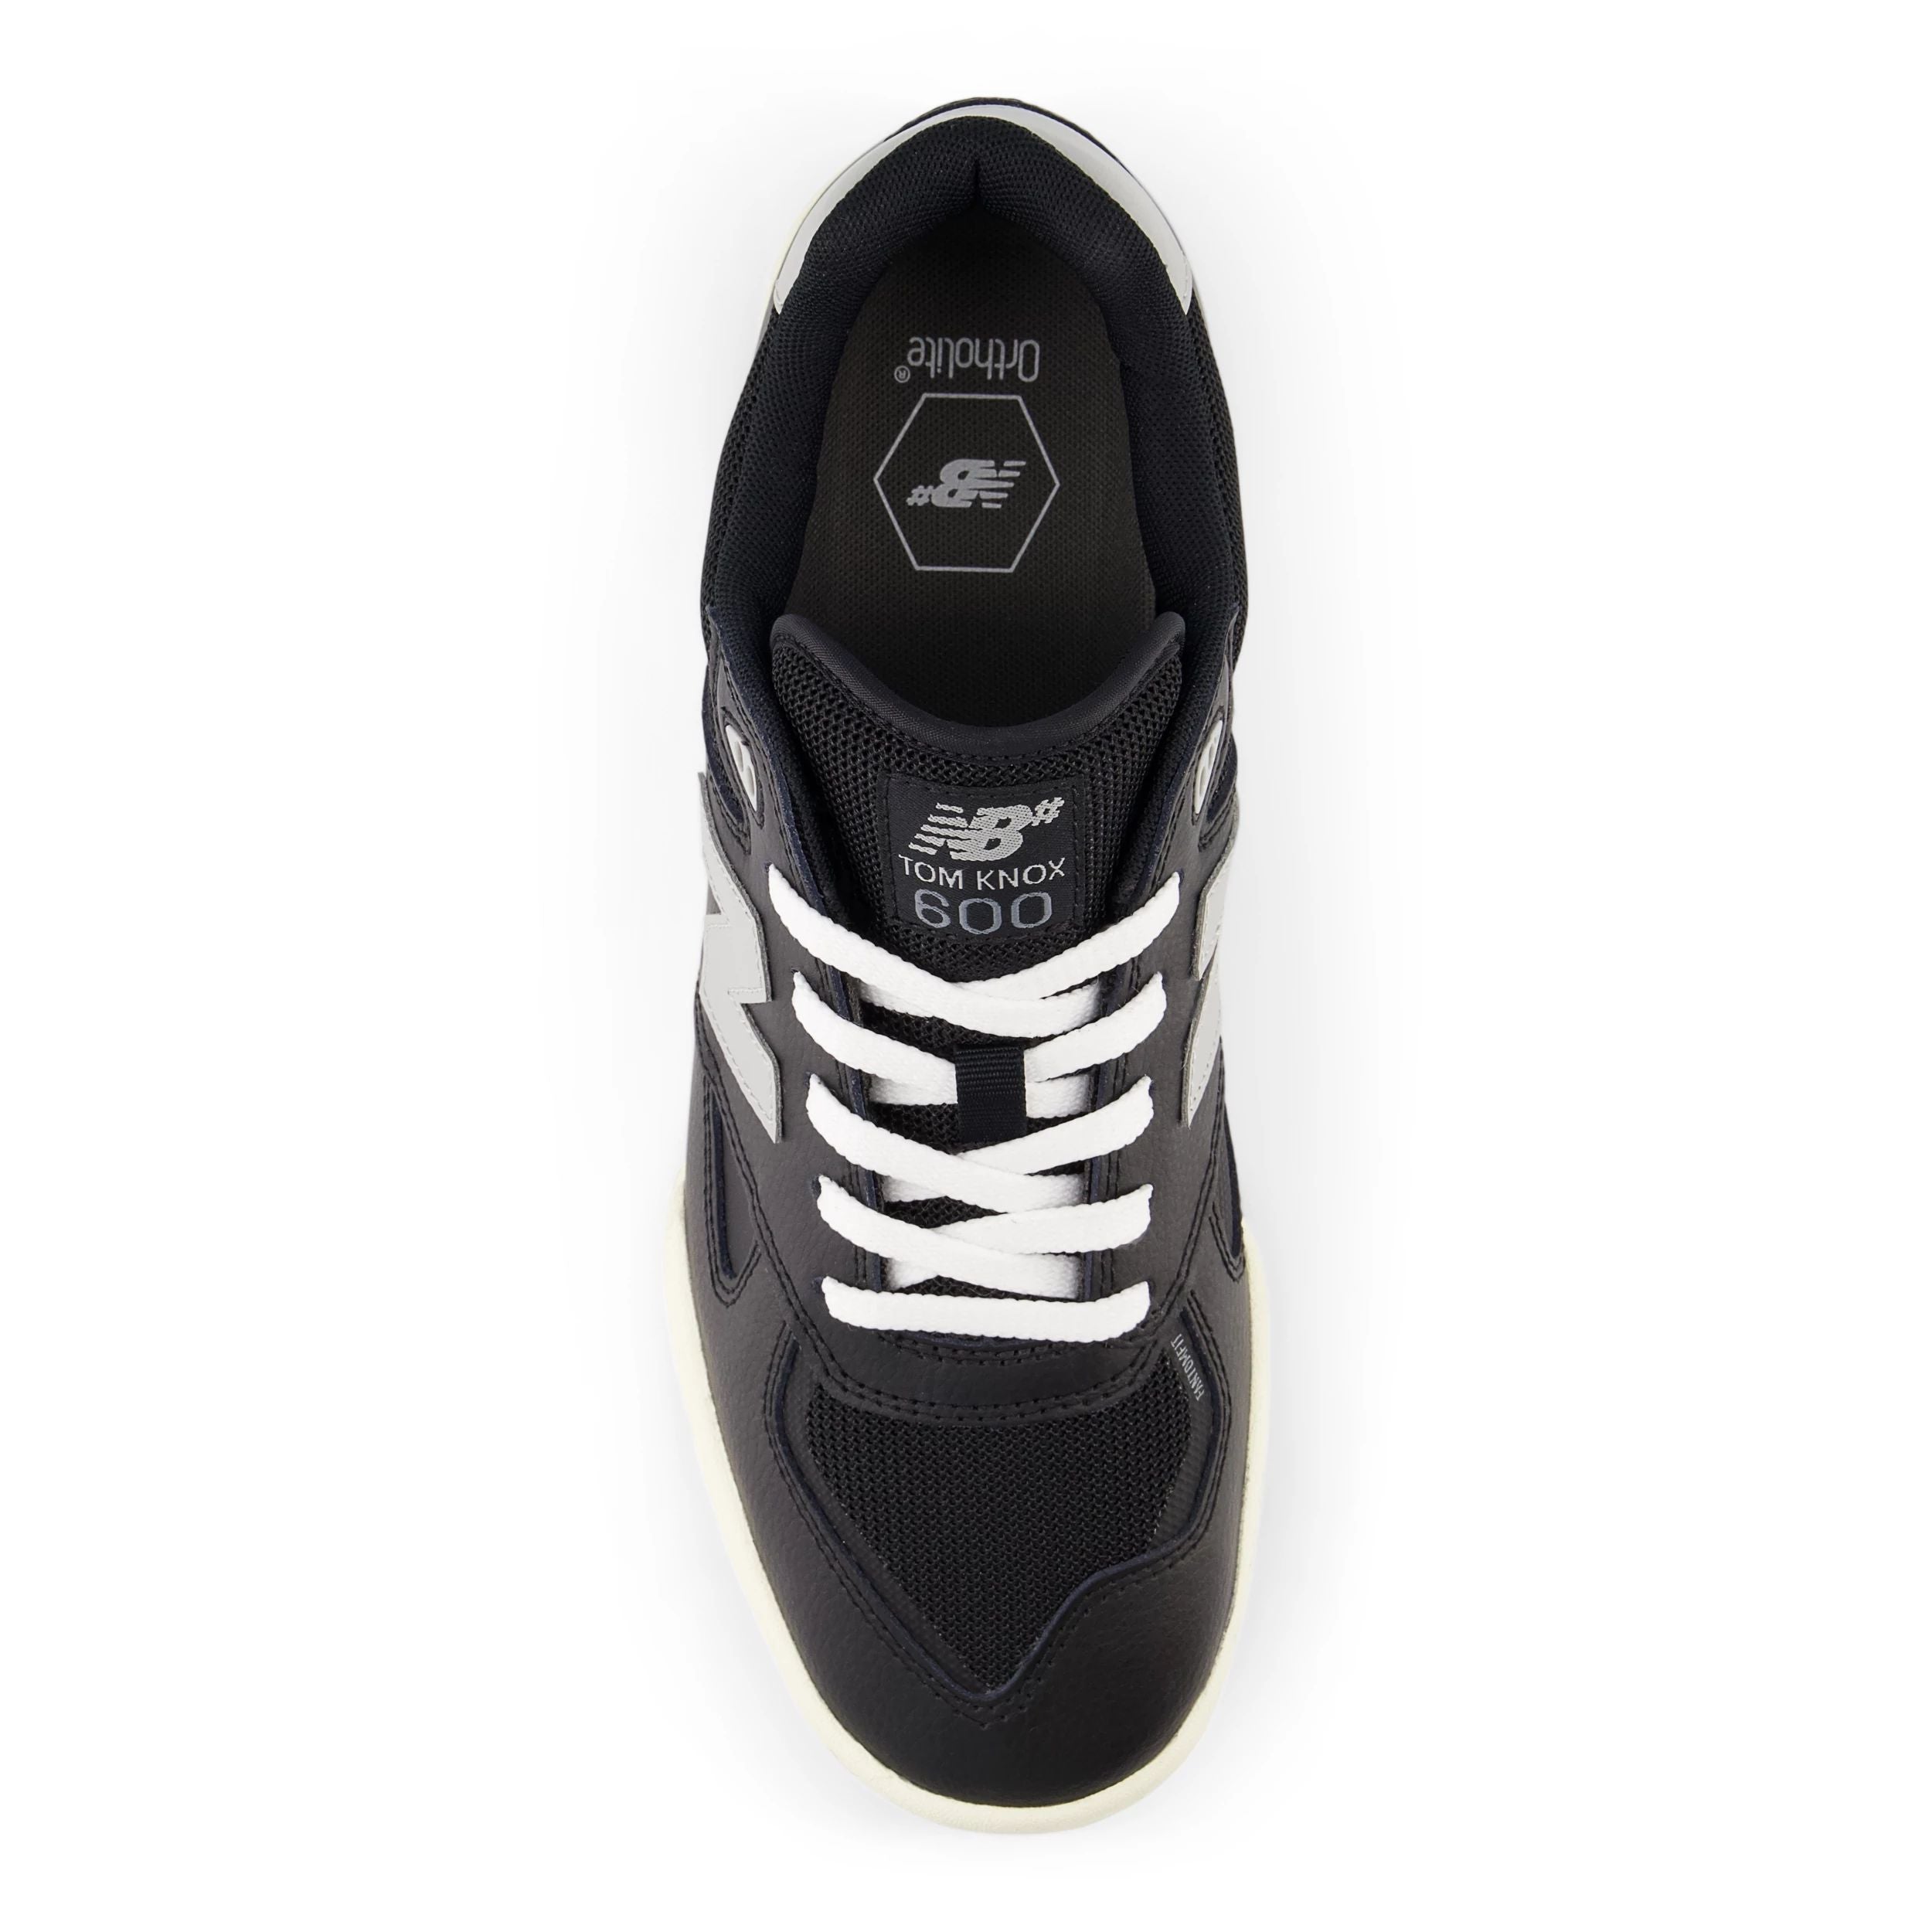 Black NM600 Tom Knox NB Numeric Skate Shoe Top